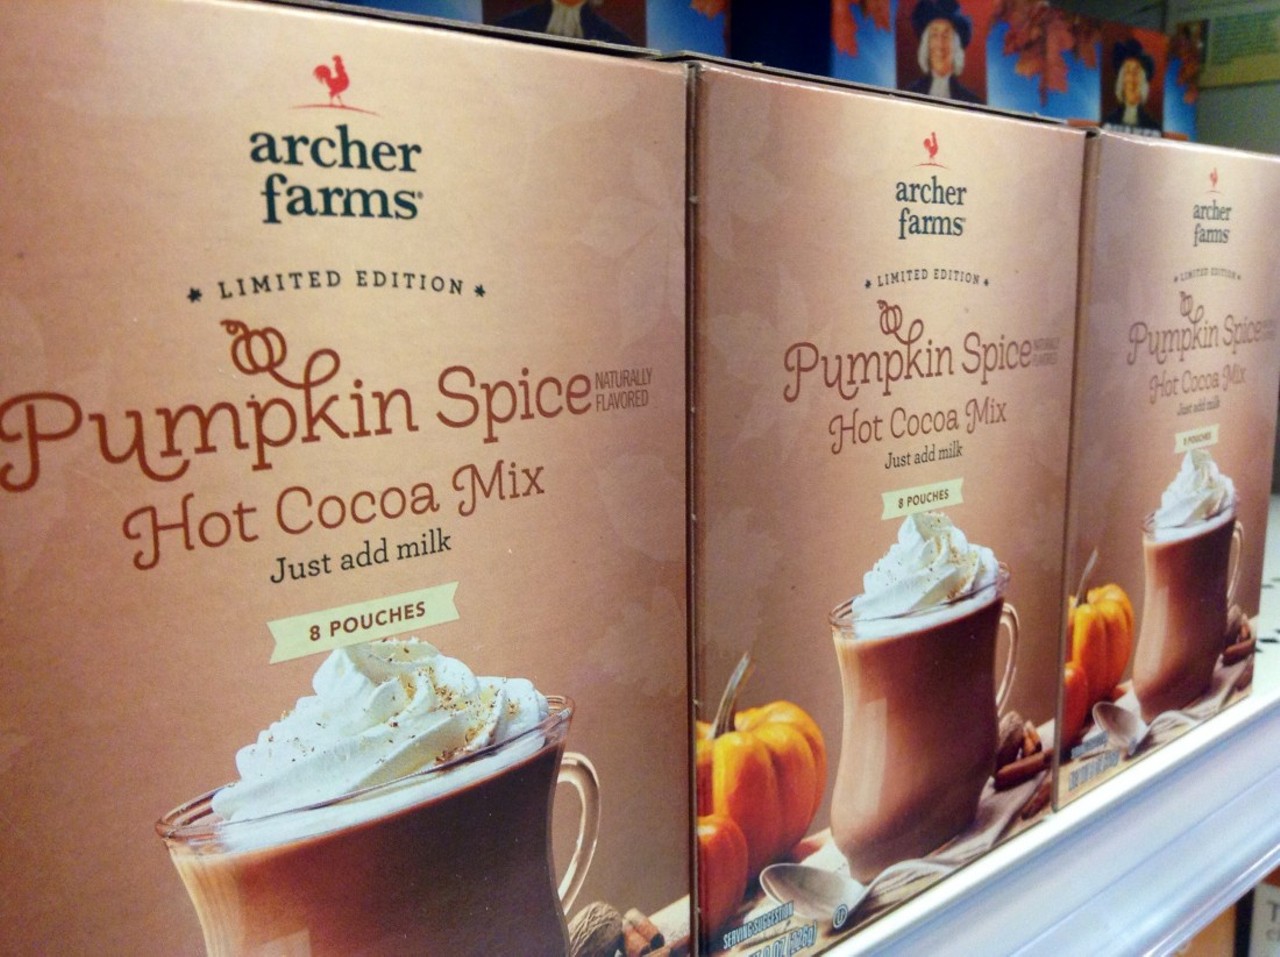 Pumpkin Spice Hot Cocoa Mix
Flickr/Mike Mozart